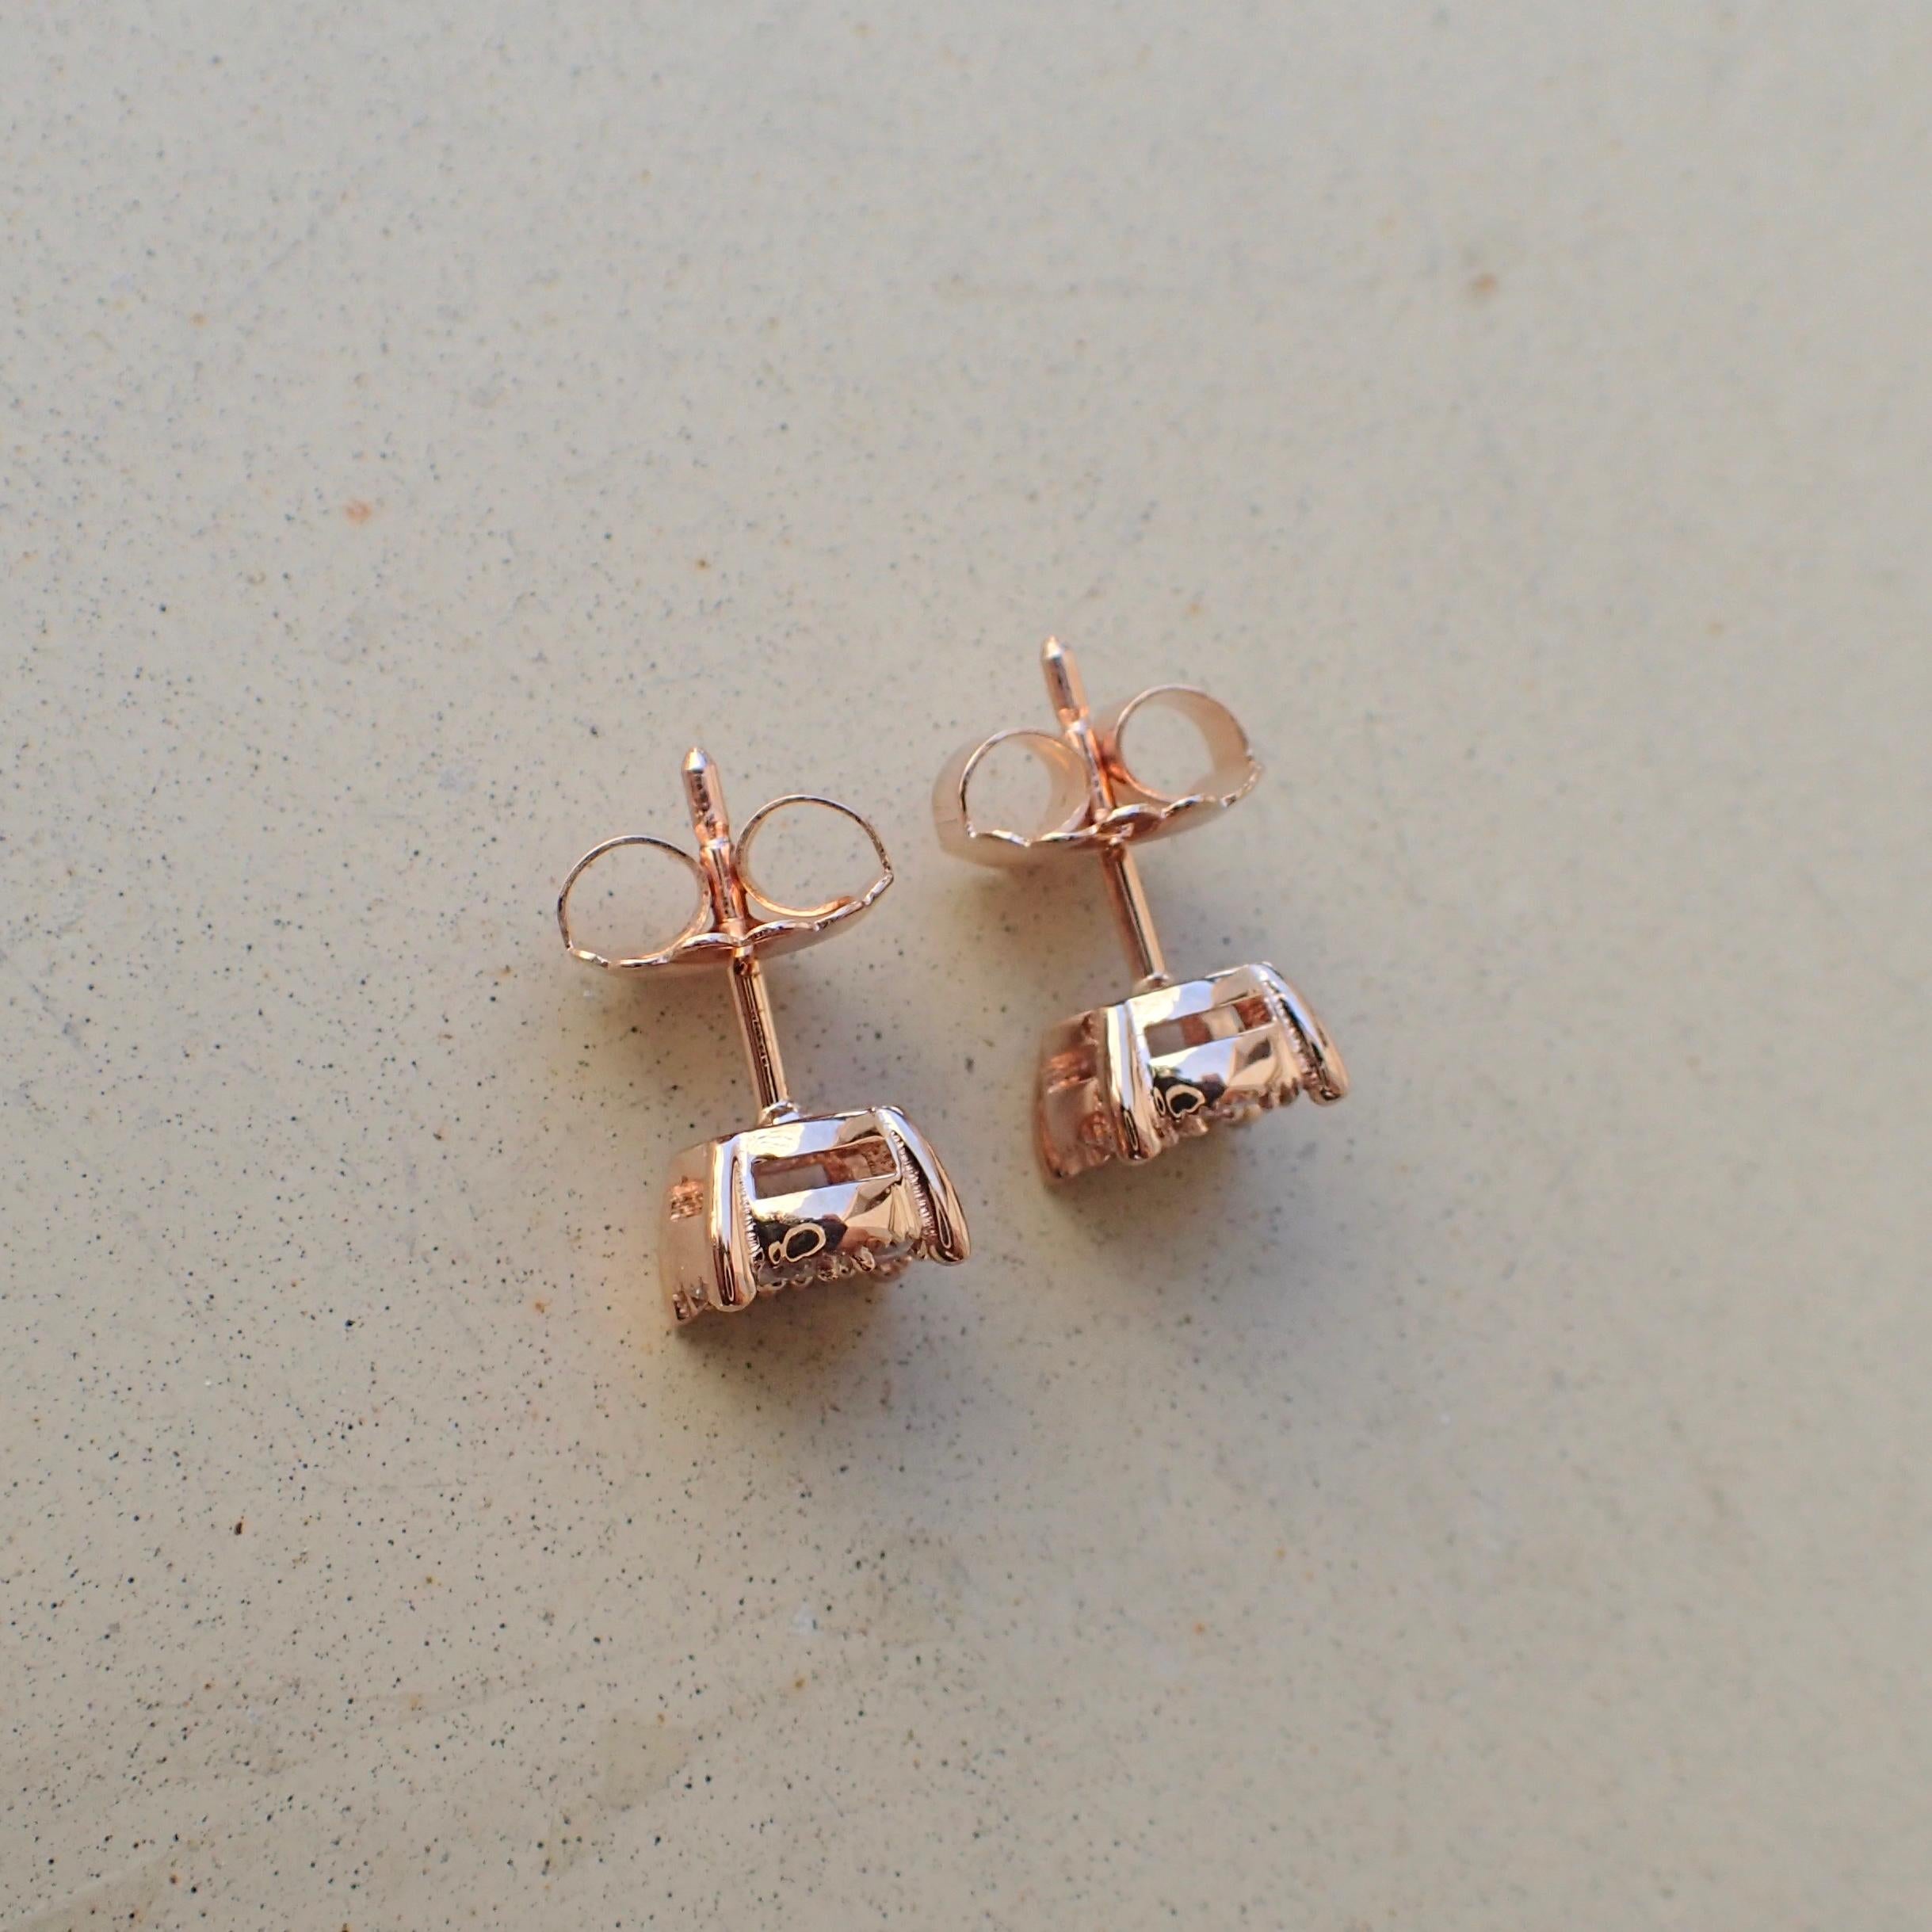 14 Karat Rose Gold Stud Earrings with 0.68 Carat of Diamond - Illusion Set 2